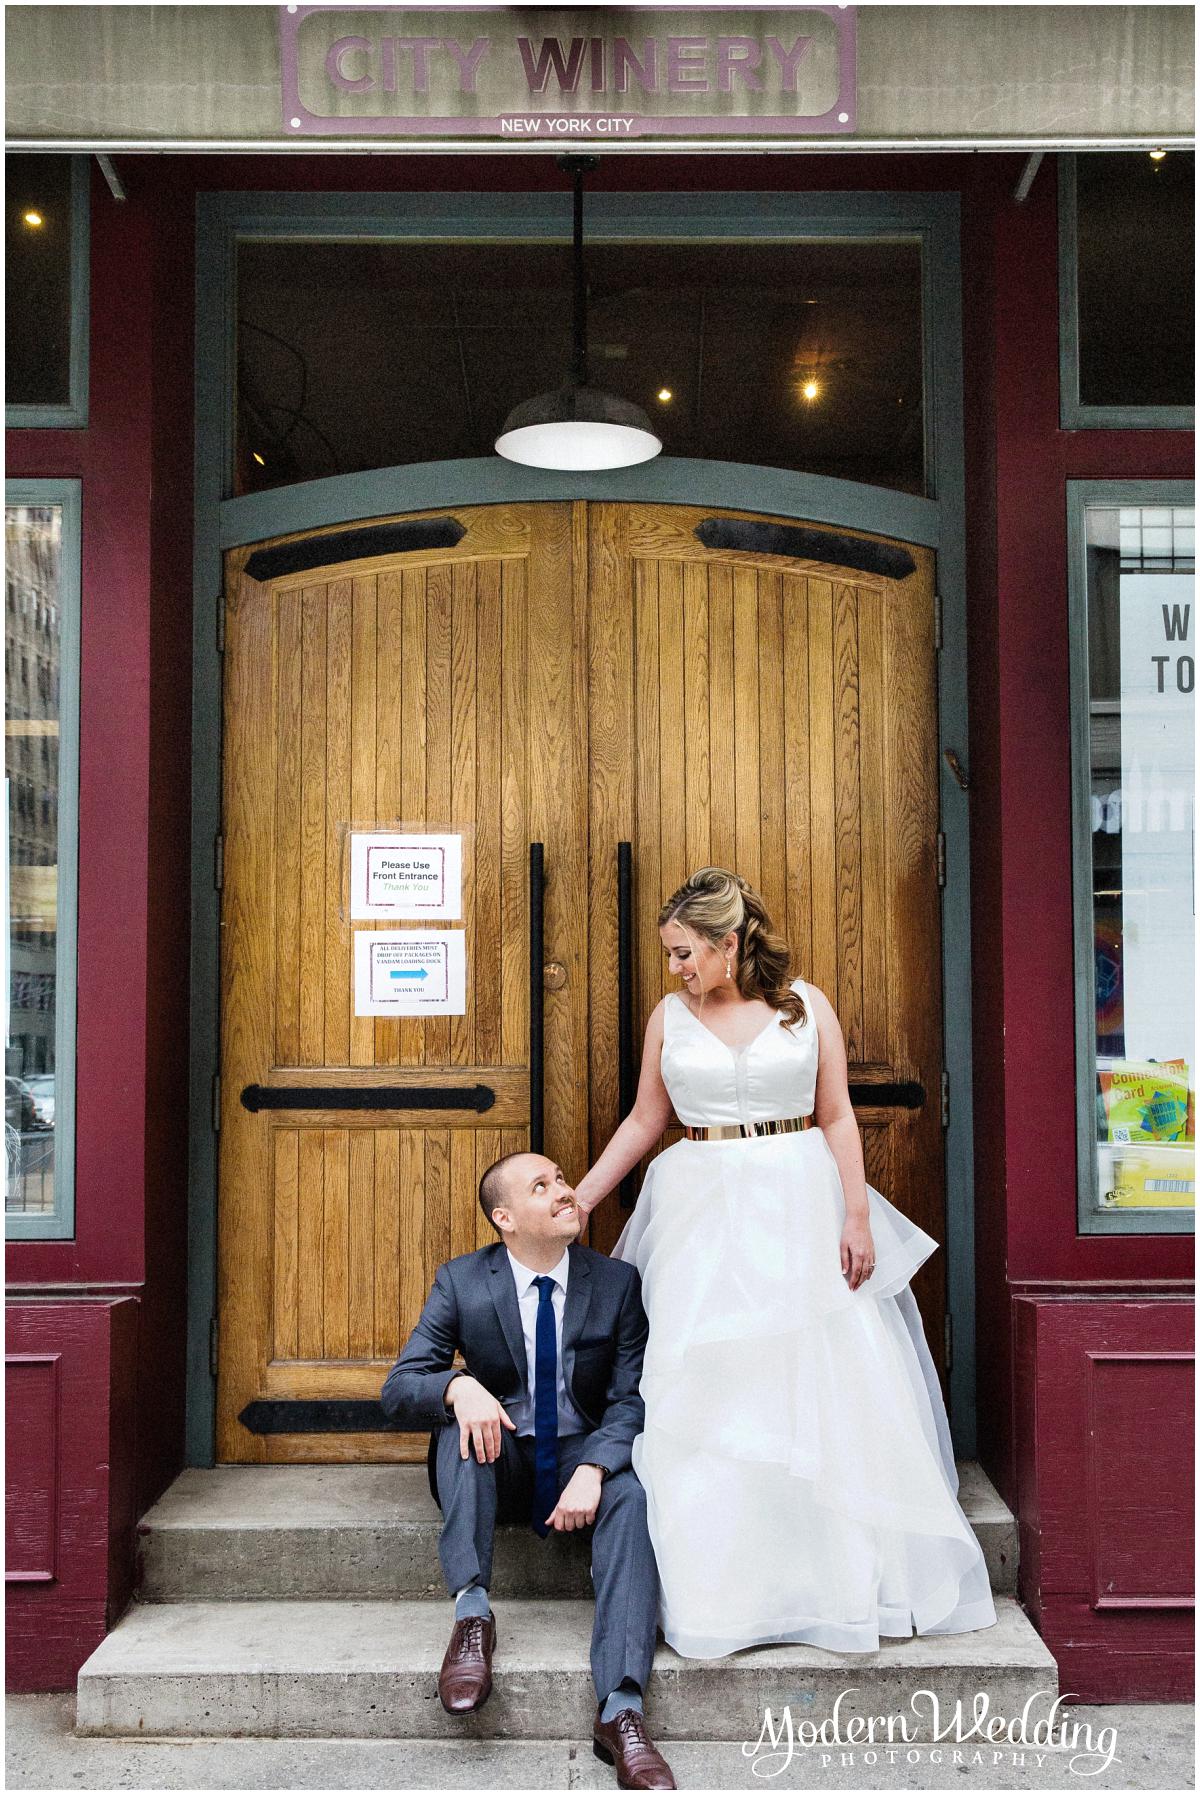 City-Winery-New-York-City-Wedding-Photographer